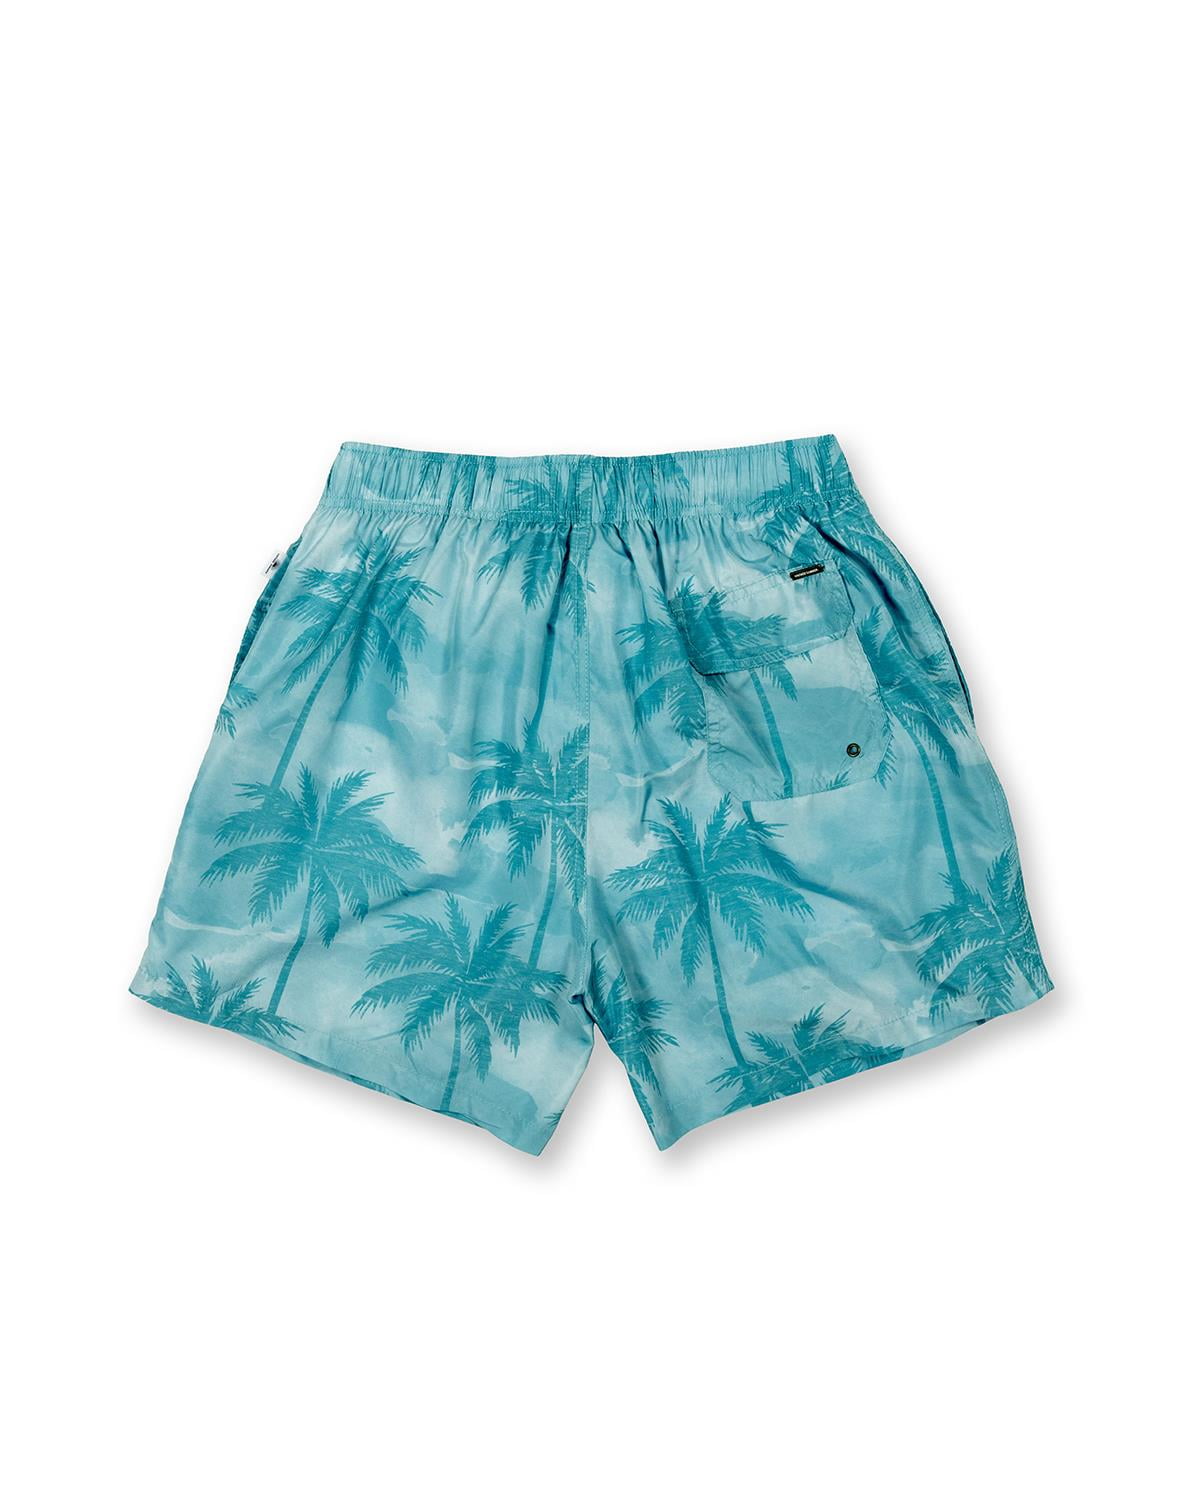 Louis Vuitton Blue Colorful Shorts Beach For Men Summer Pool Party